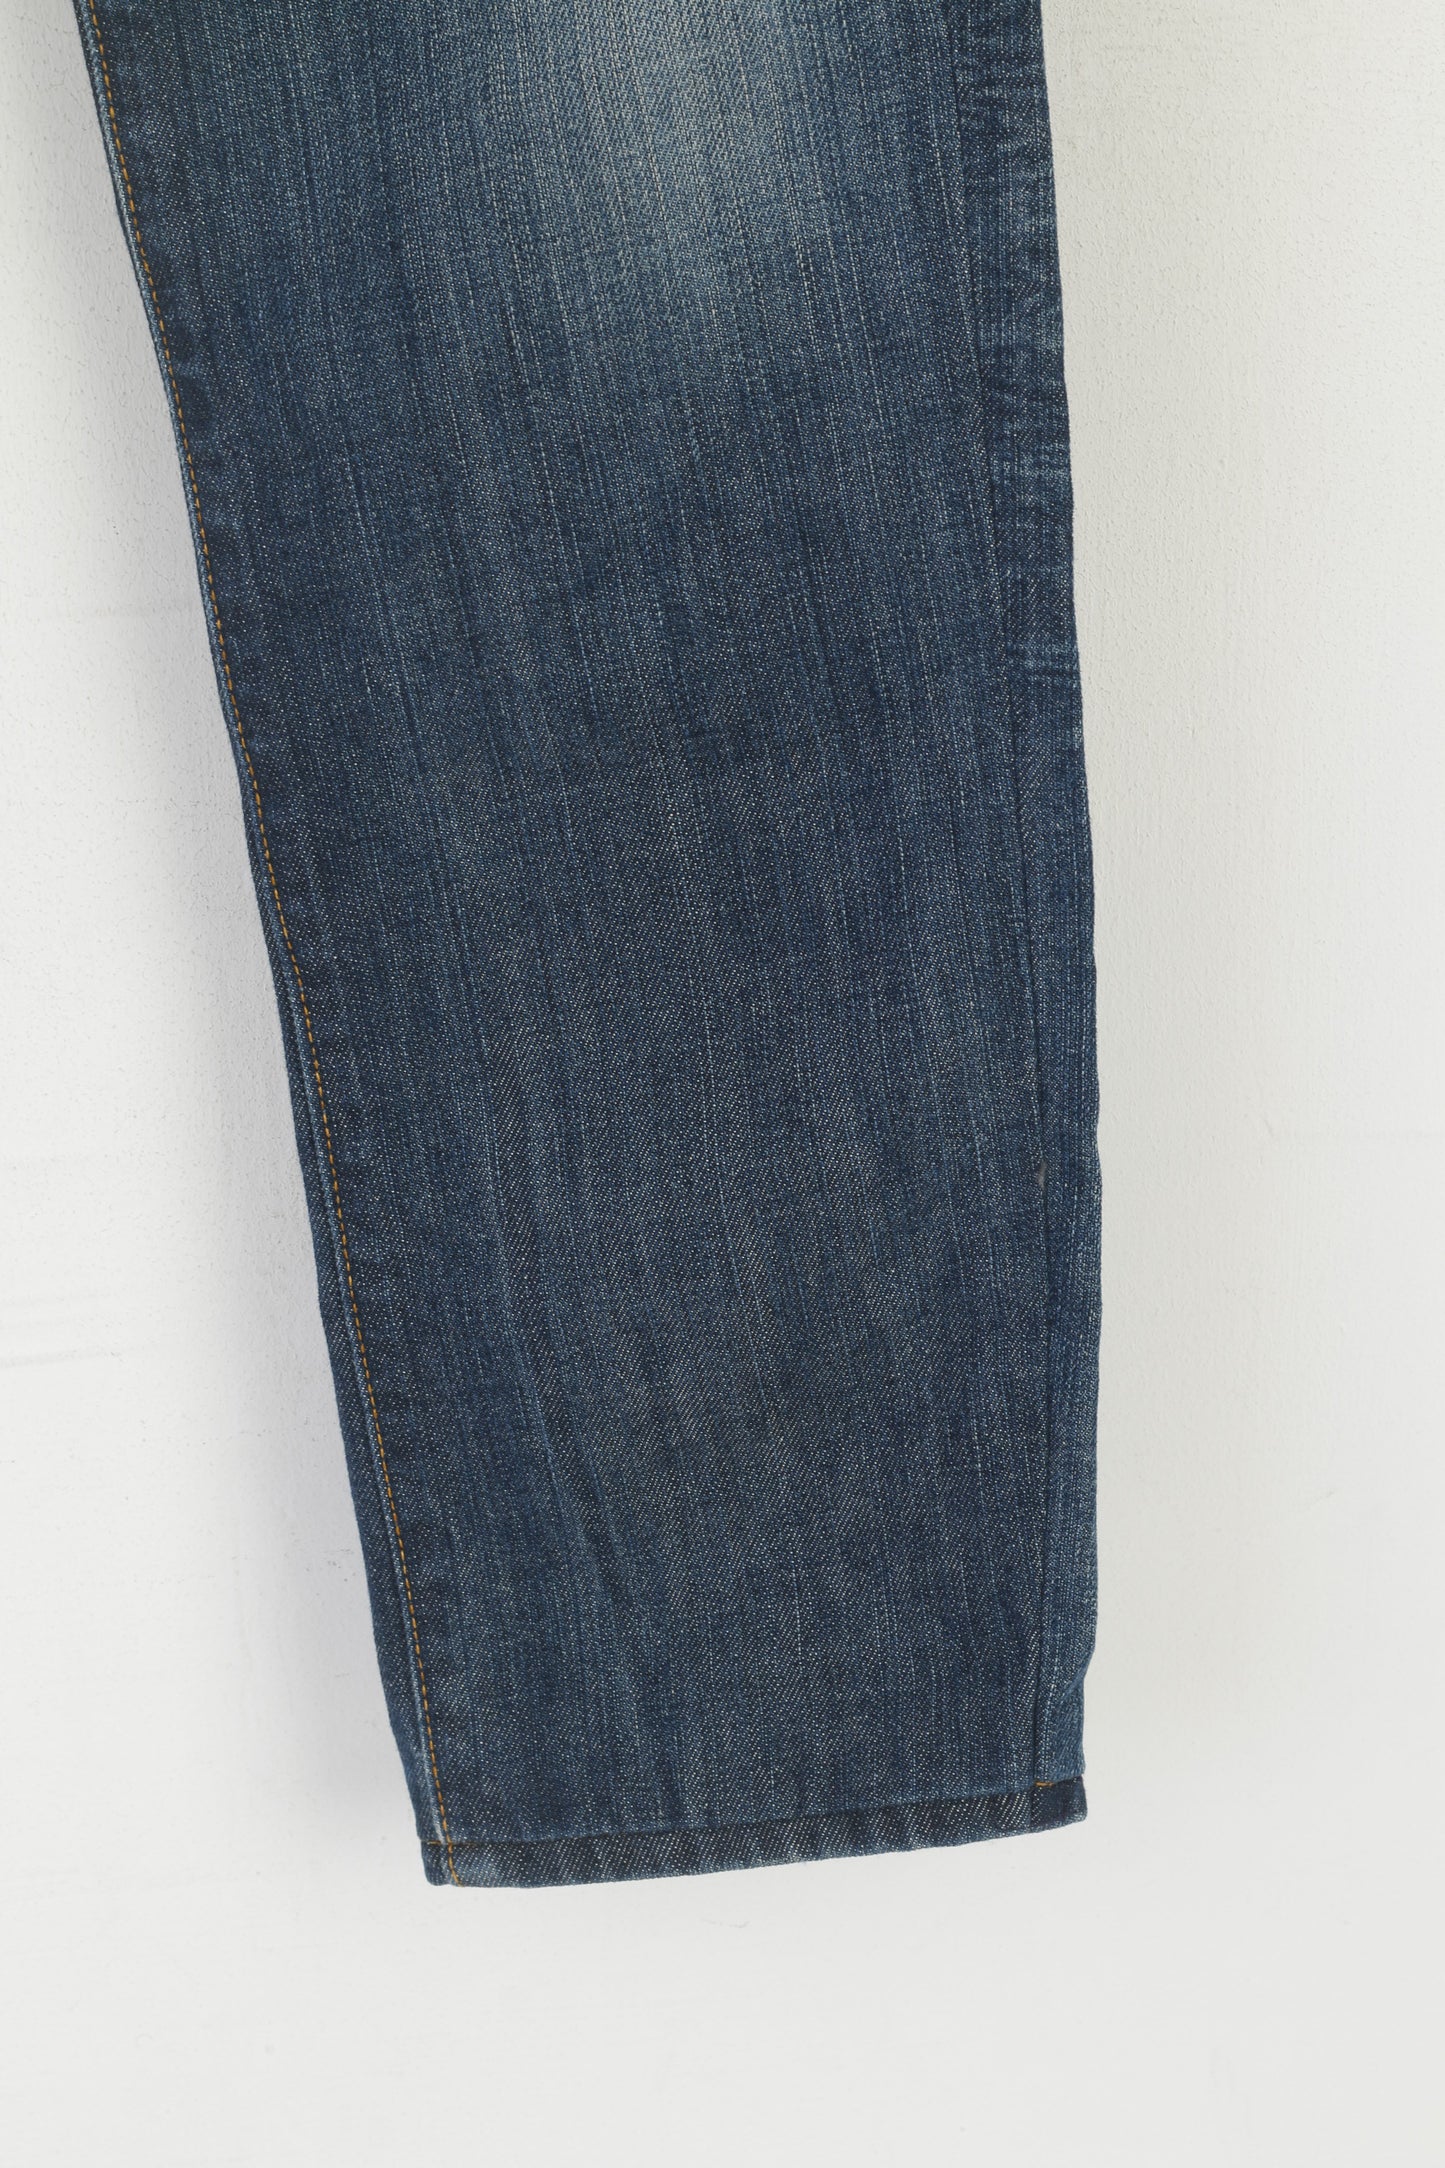 Levi's 501 Donna 30 Pantaloni Jeans Pantaloni in denim blu con gamba dritta e bottoni